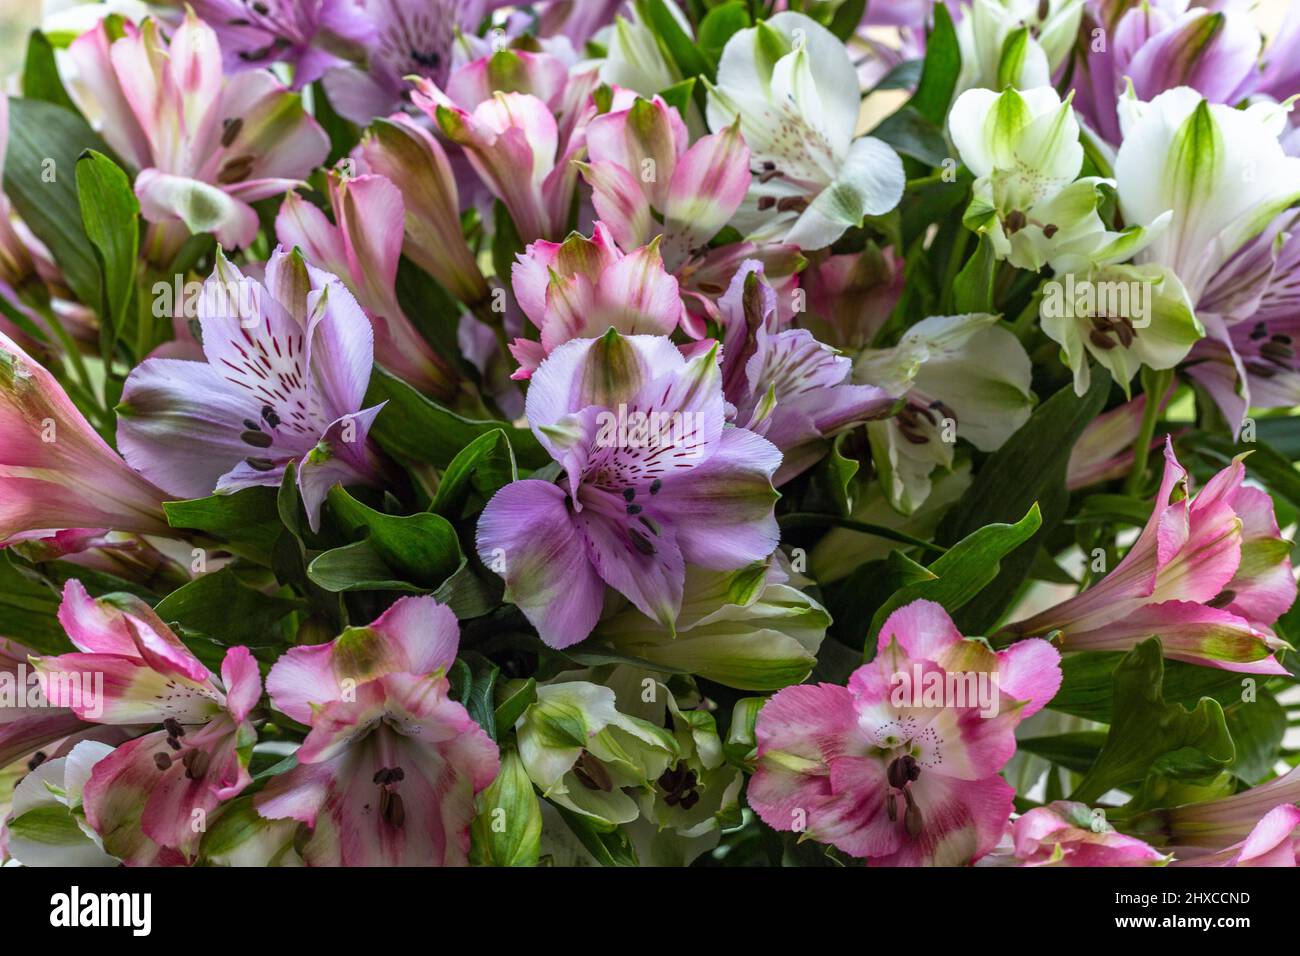 Alstroemeria Blumen aus nächster Nähe. Stockfoto